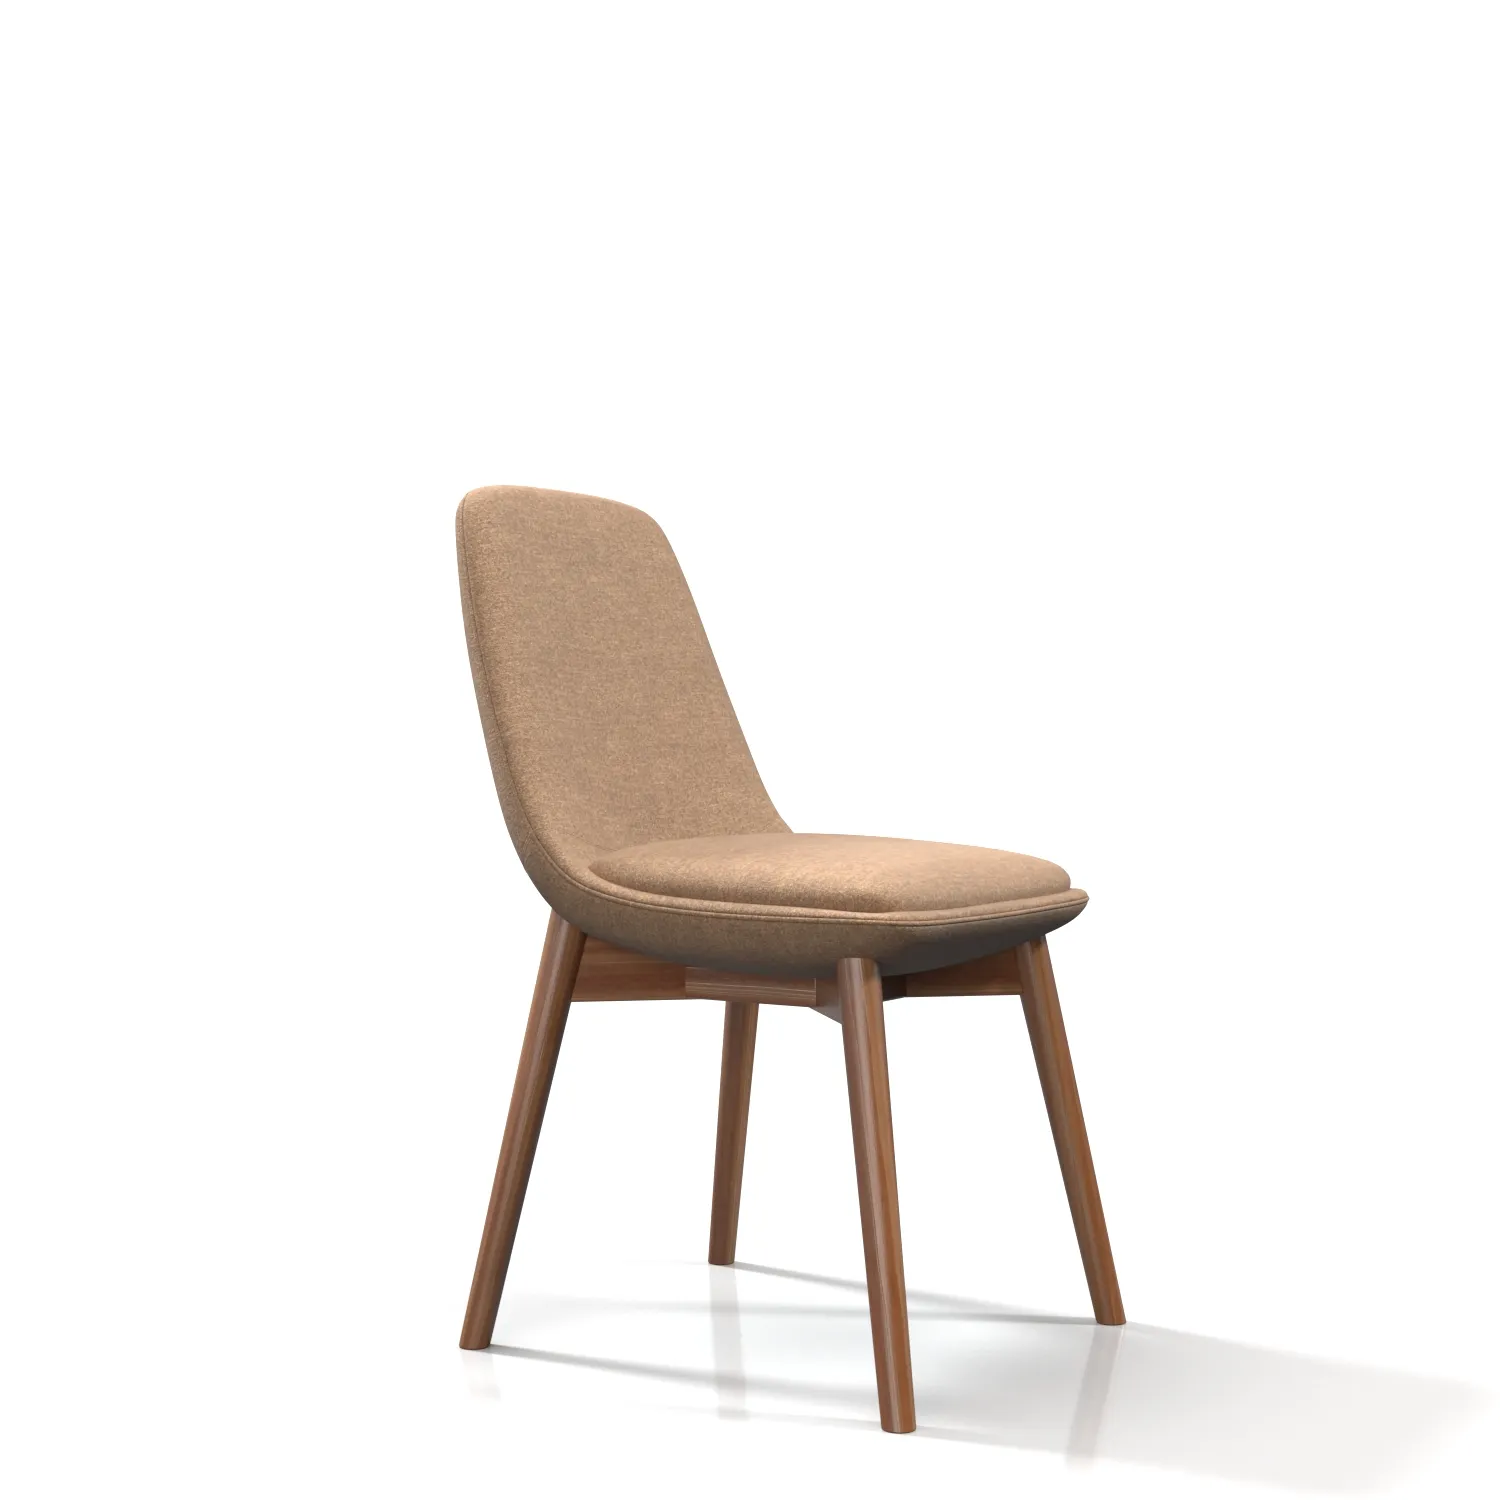 Chloe Chair wood Legs PBR 3D Model_01